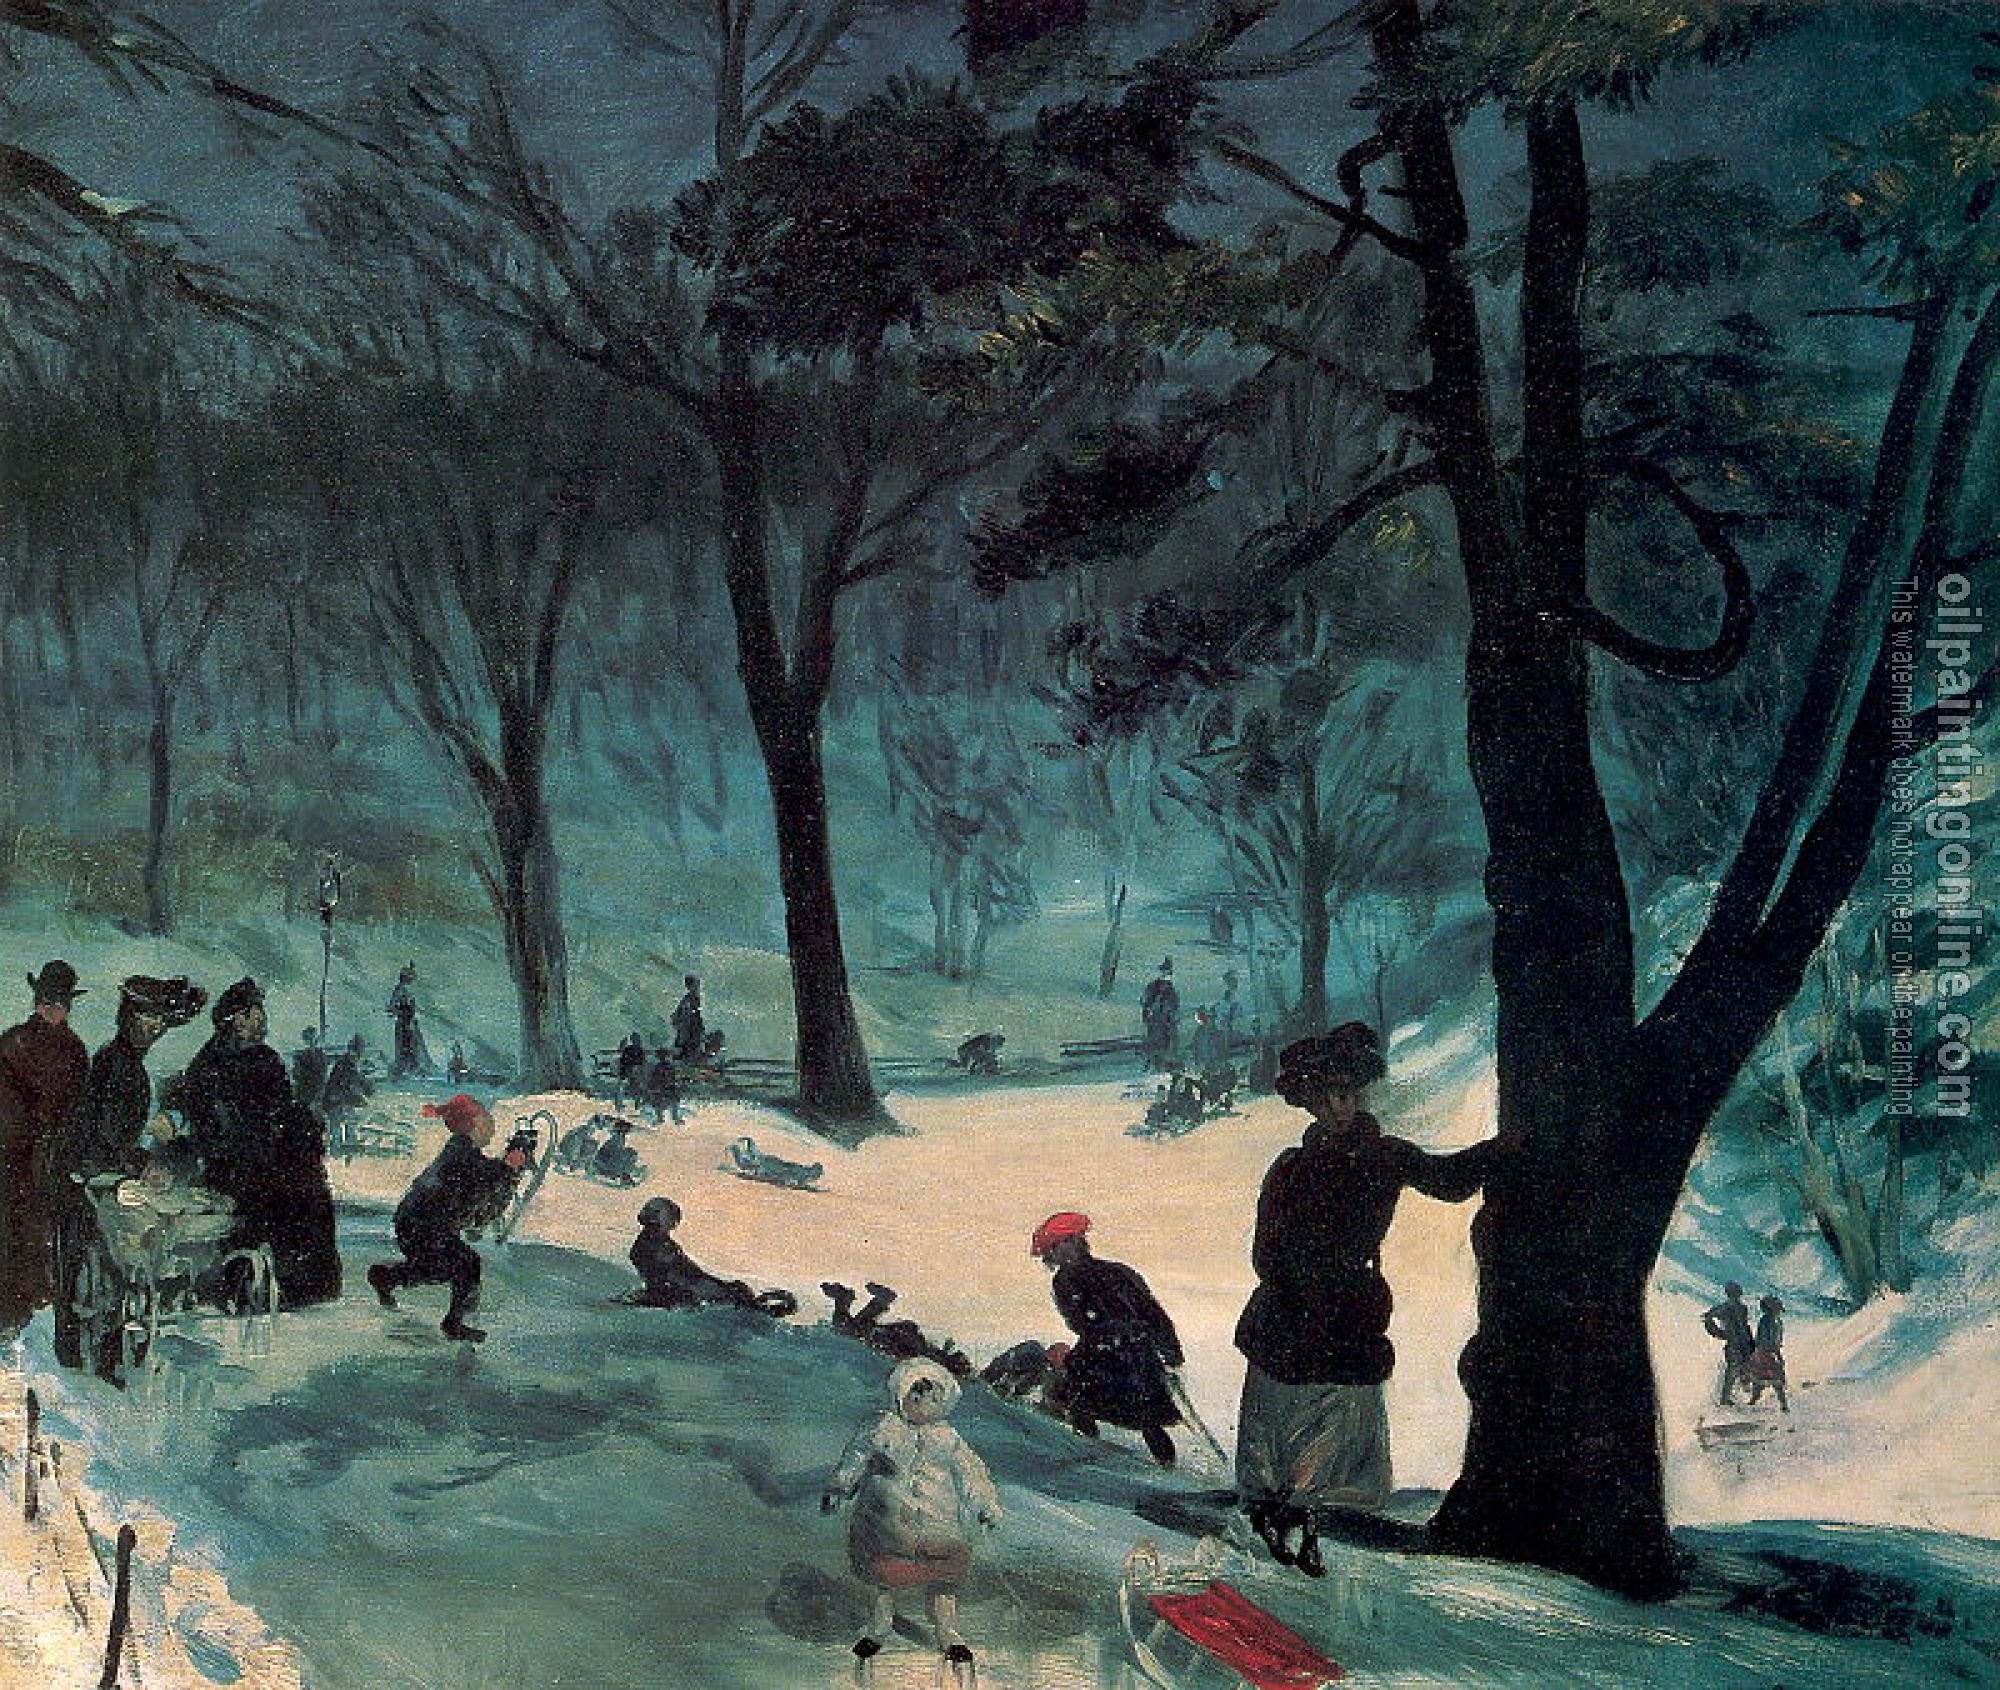 William James Glackens - Central Park Winter